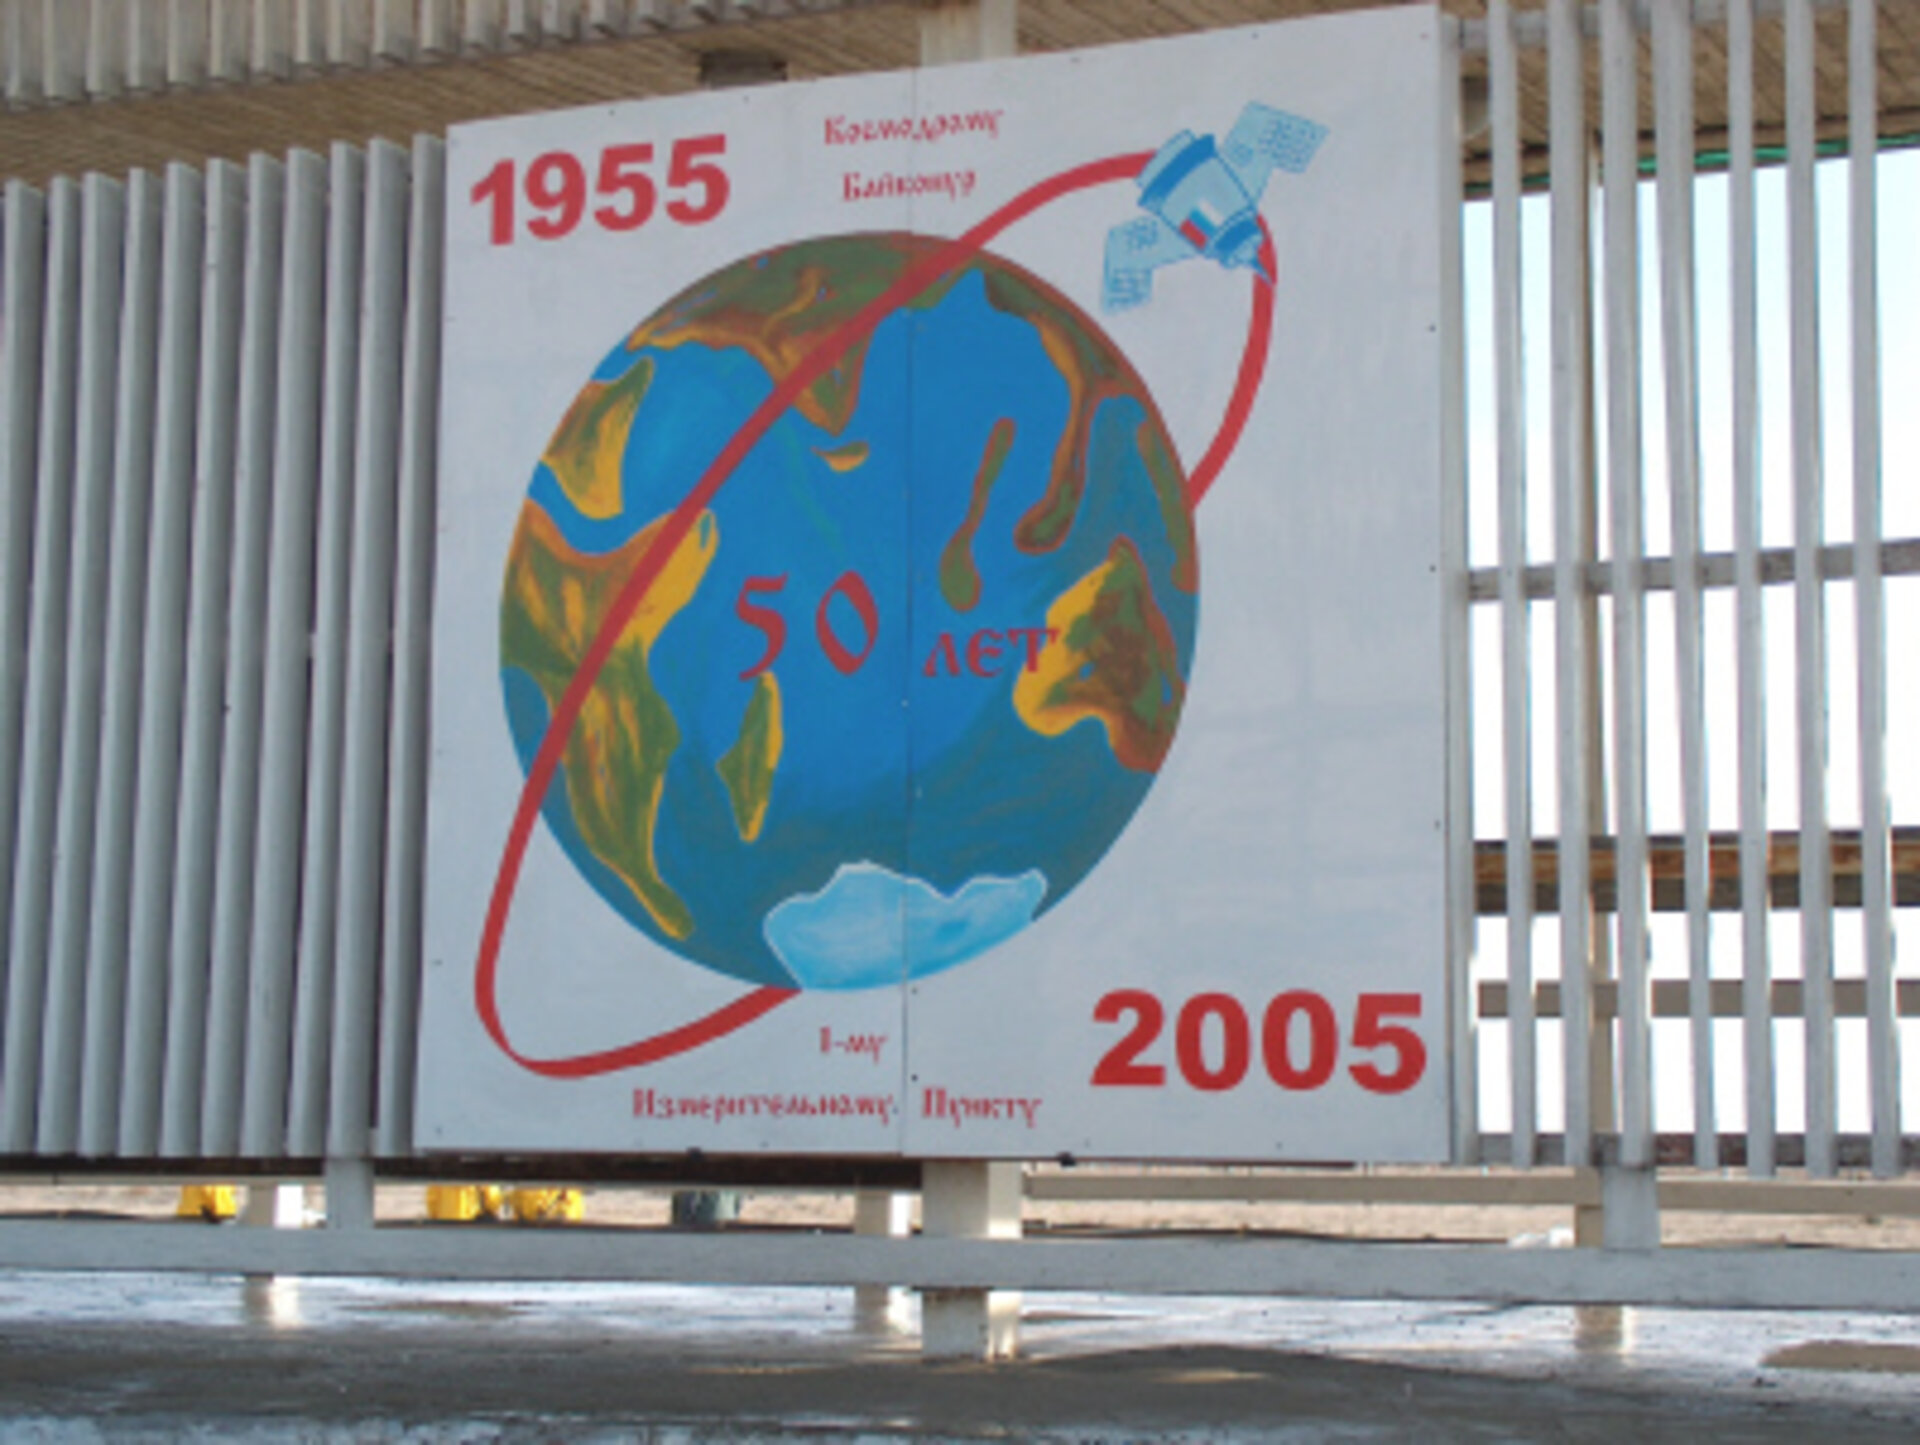 Baikonour cosmodrom celebrating 50th anniversary in 2005